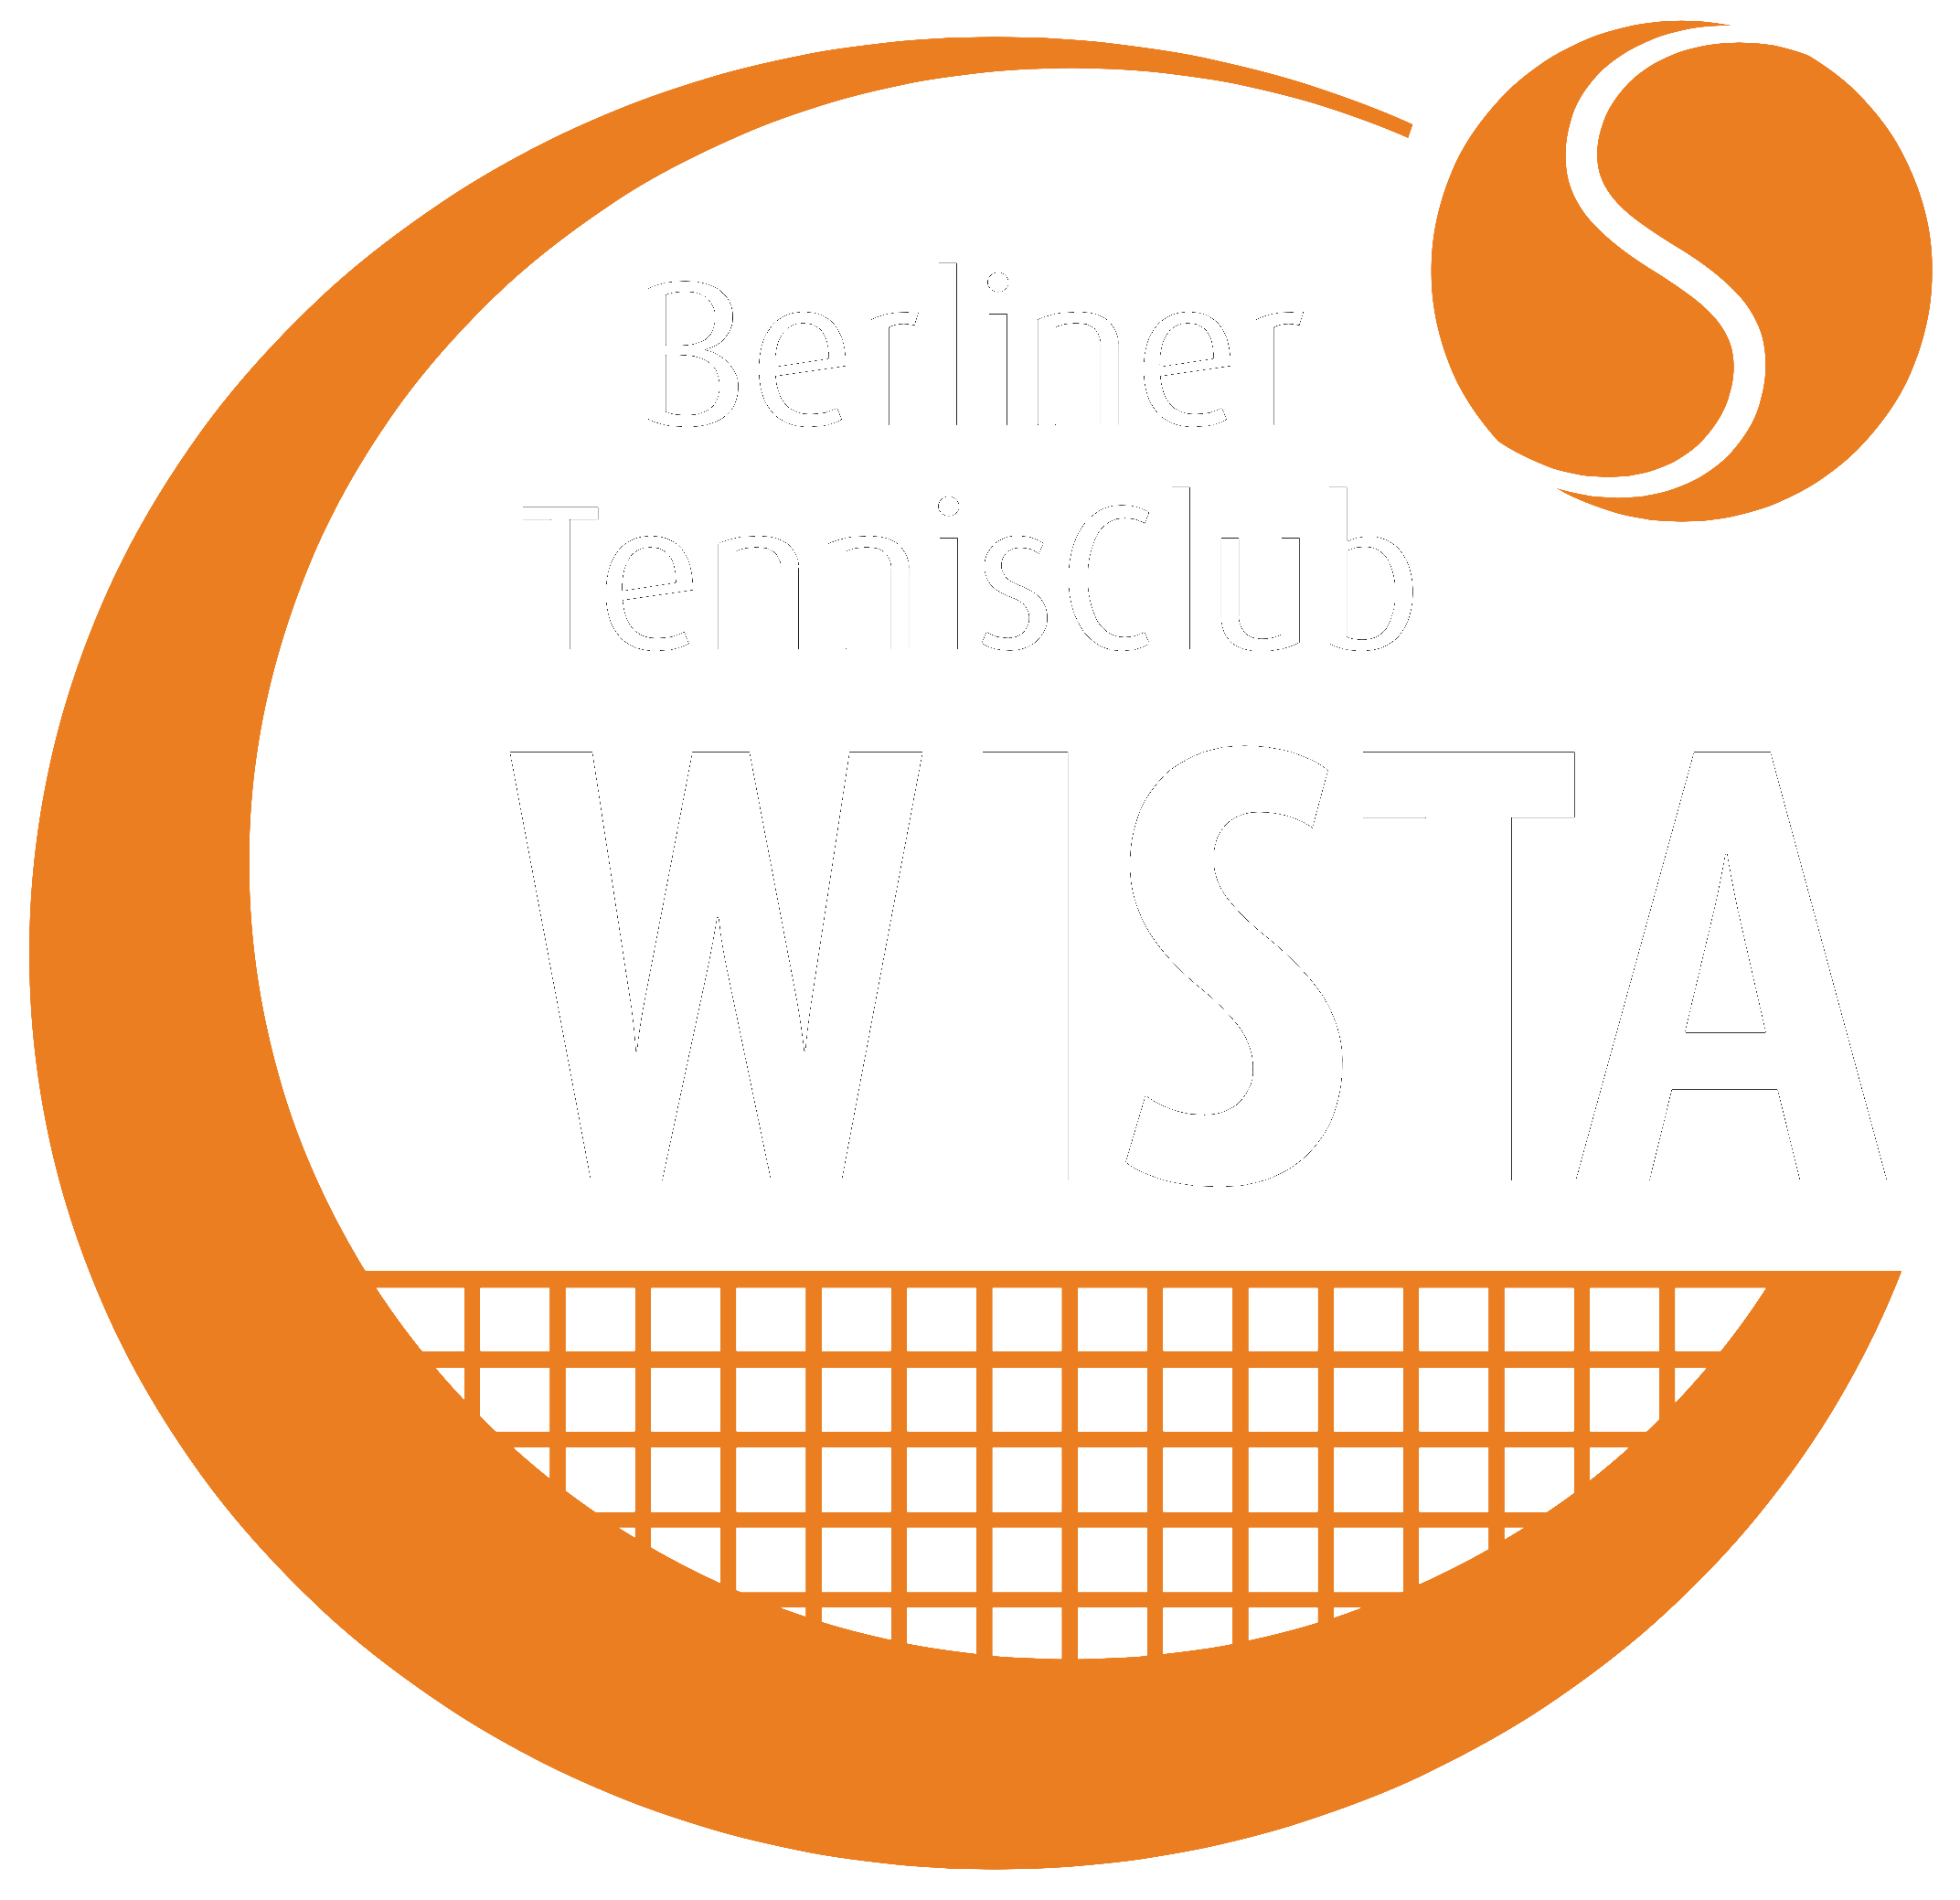 Logo BTC WISTA